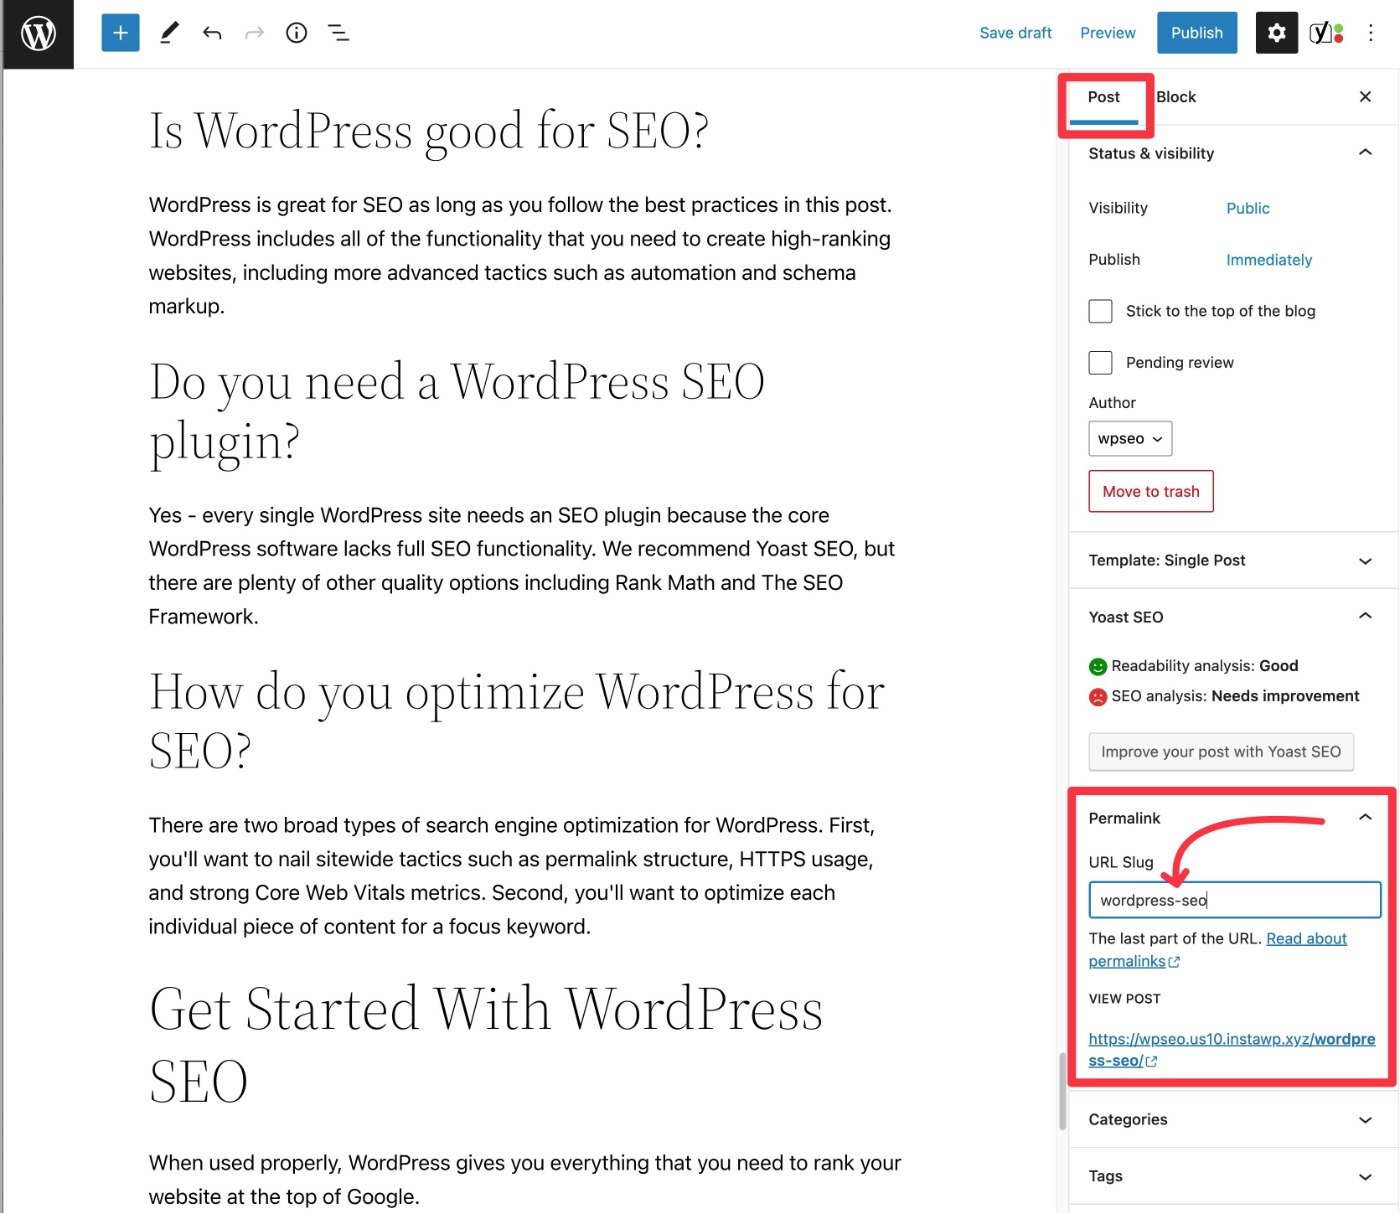 Optimize WordPress URL slug for SEO